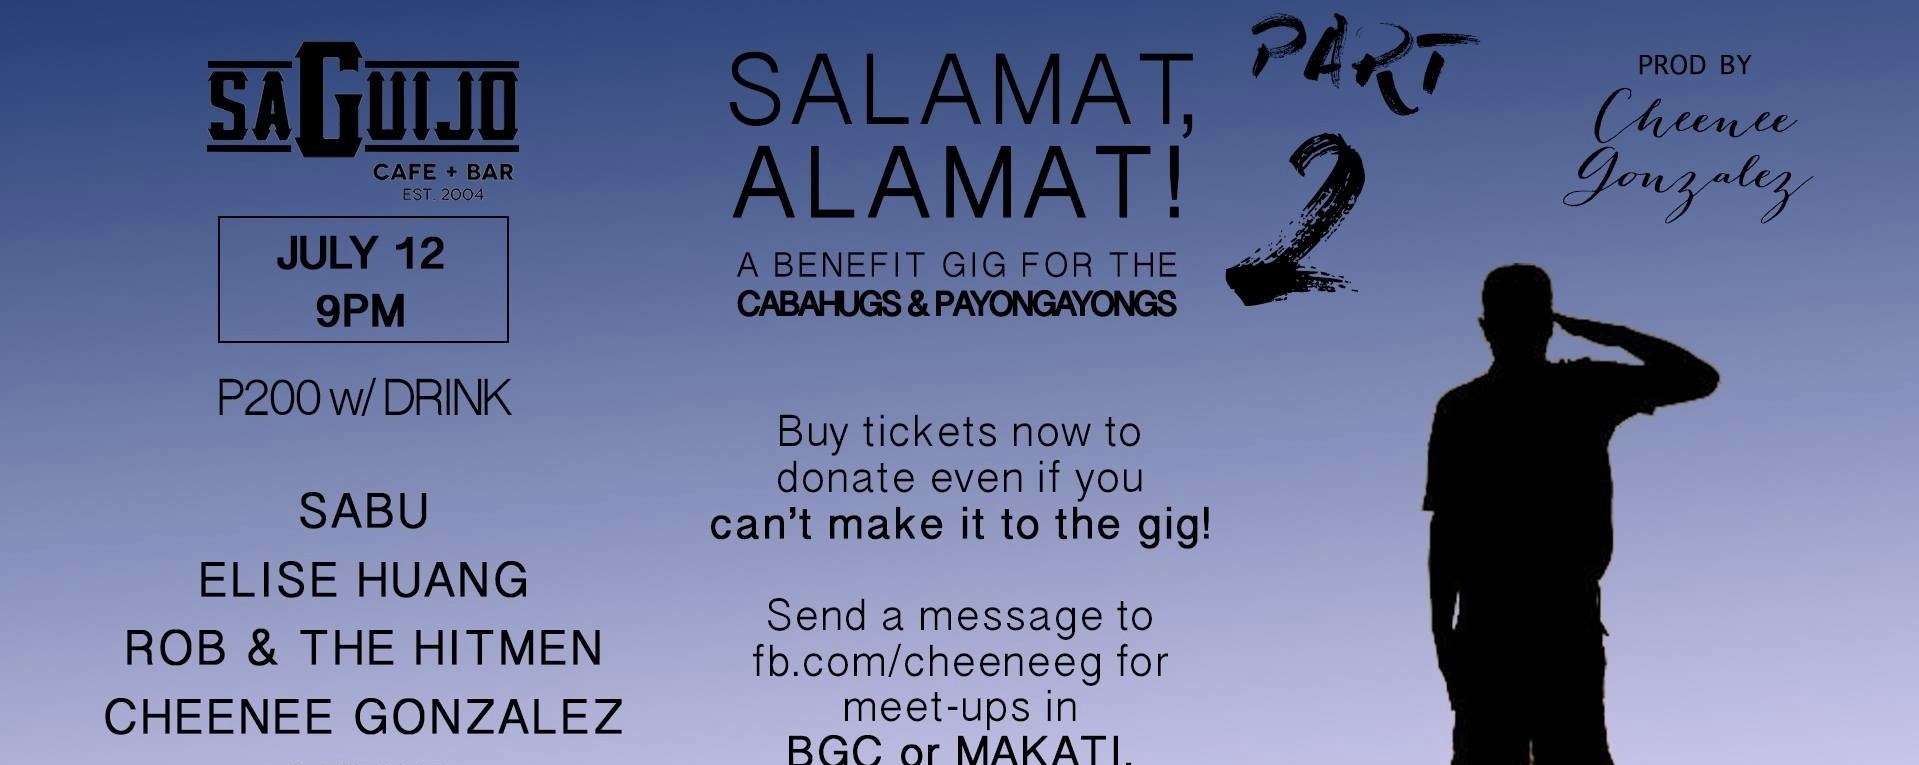 Salamat,Alamat! 2: A Benefit Gig for the Cabahugs & Payongayongs